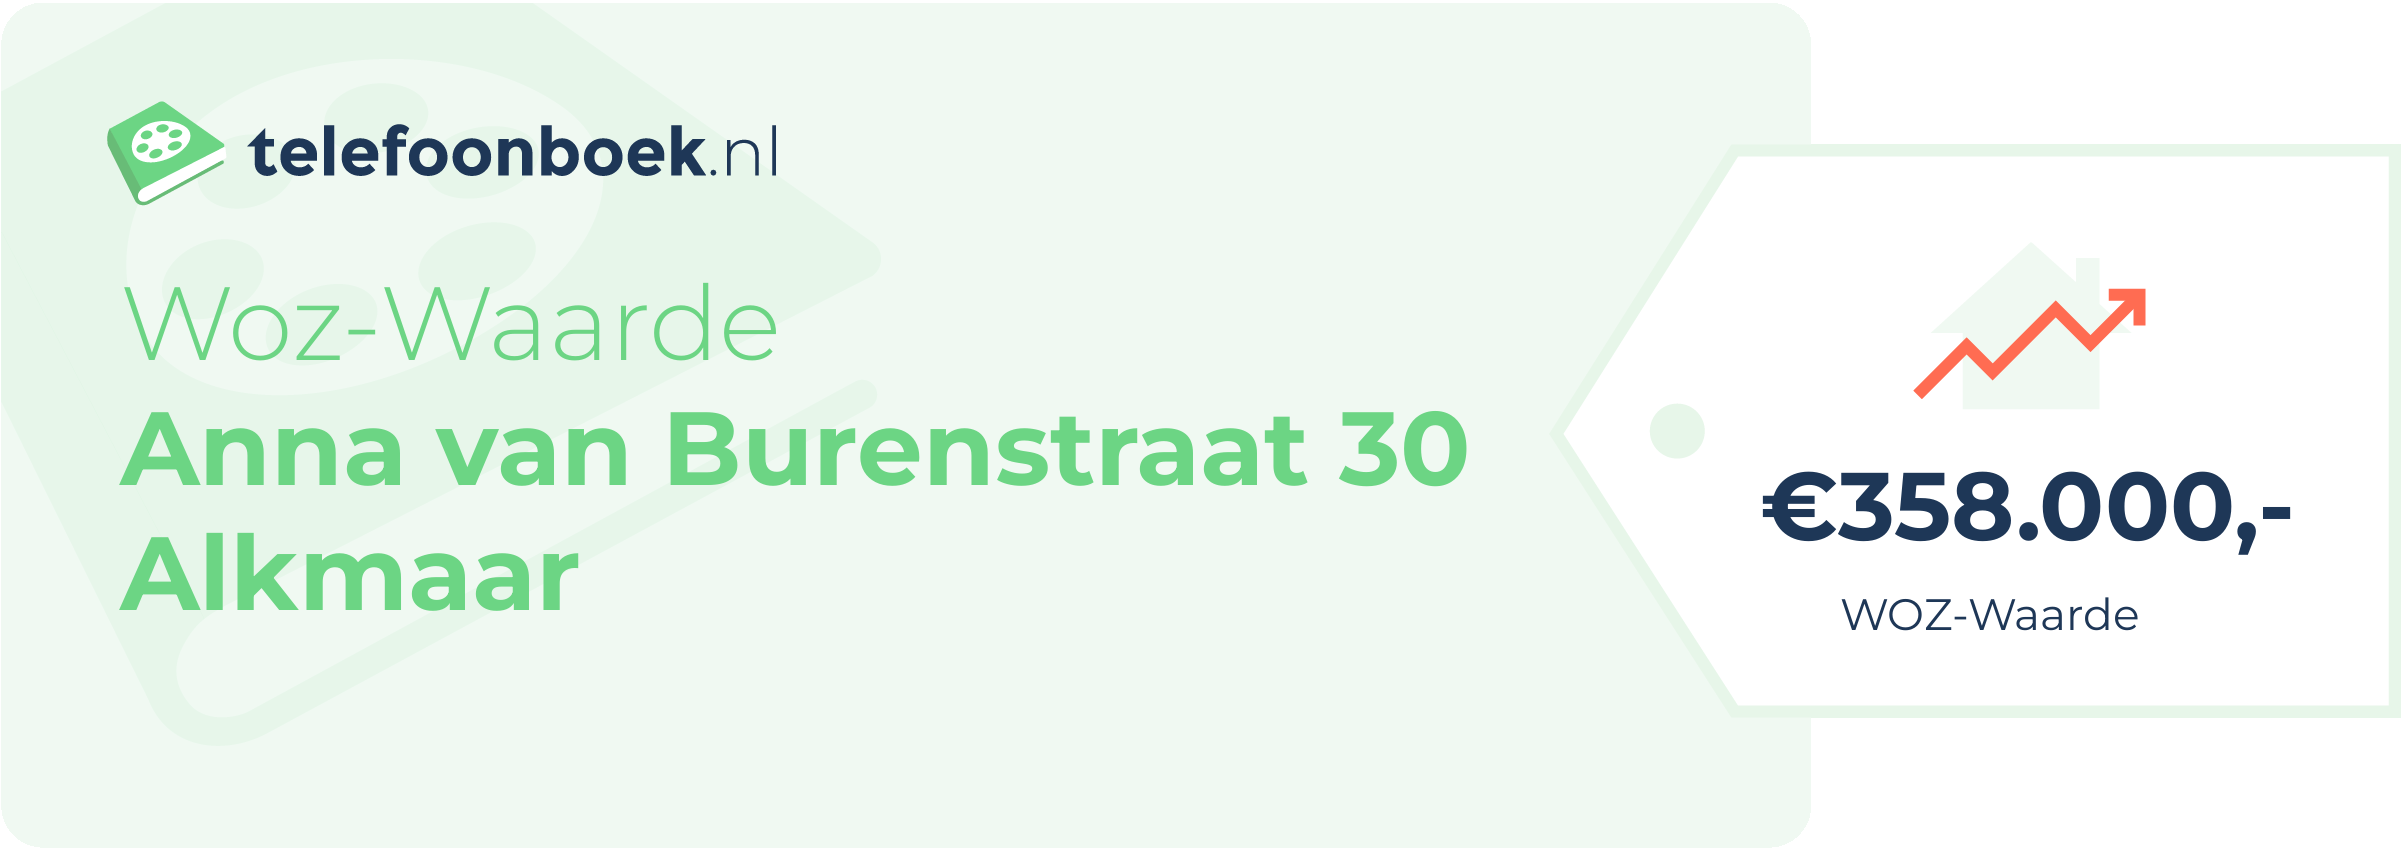 WOZ-waarde Anna Van Burenstraat 30 Alkmaar